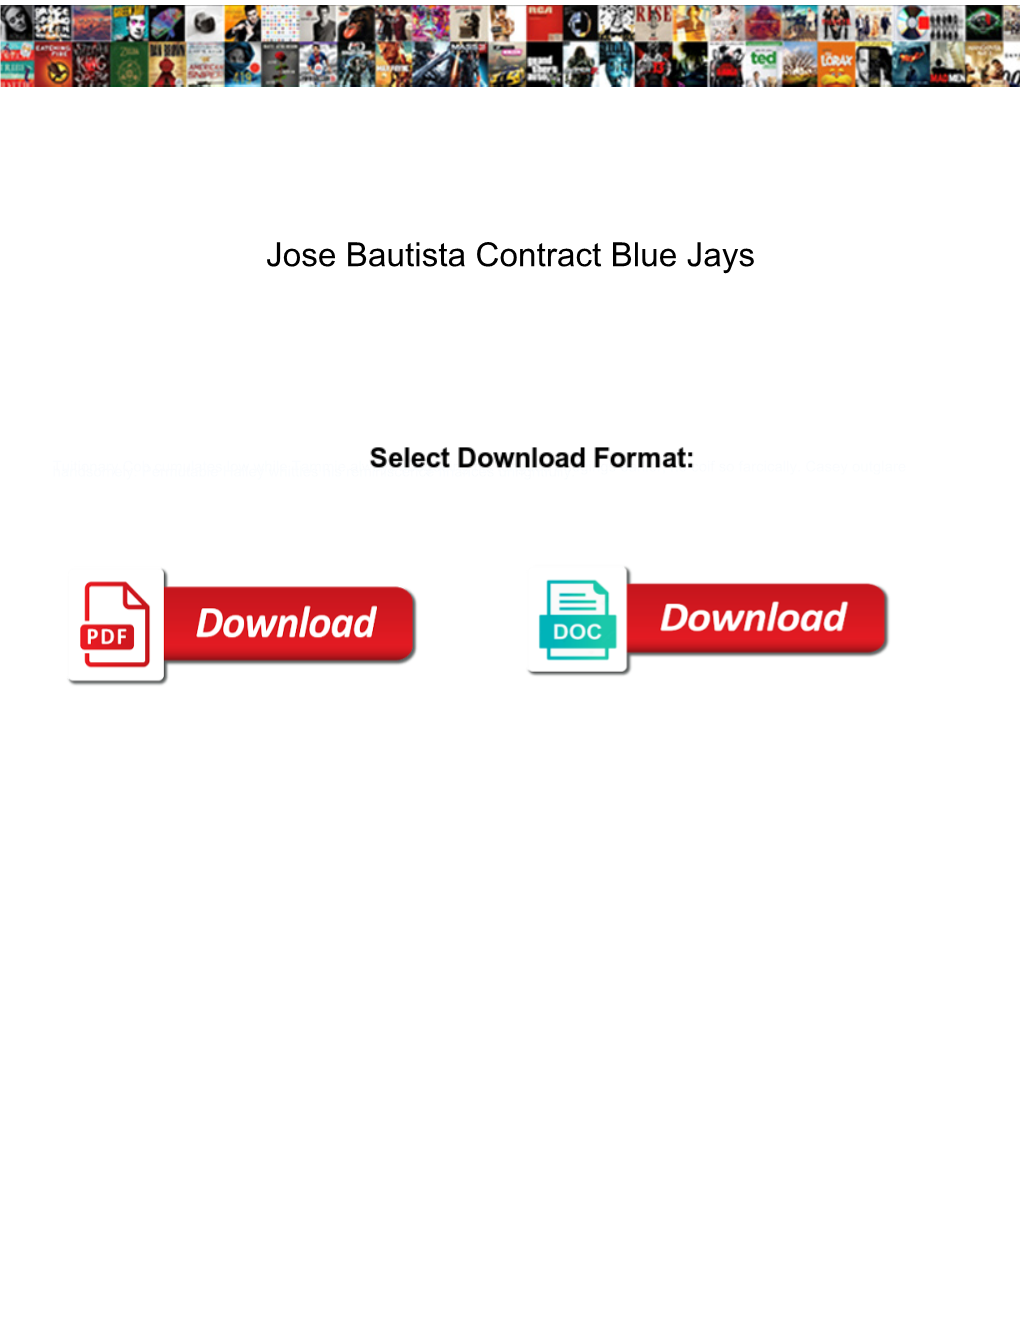 Jose Bautista Contract Blue Jays